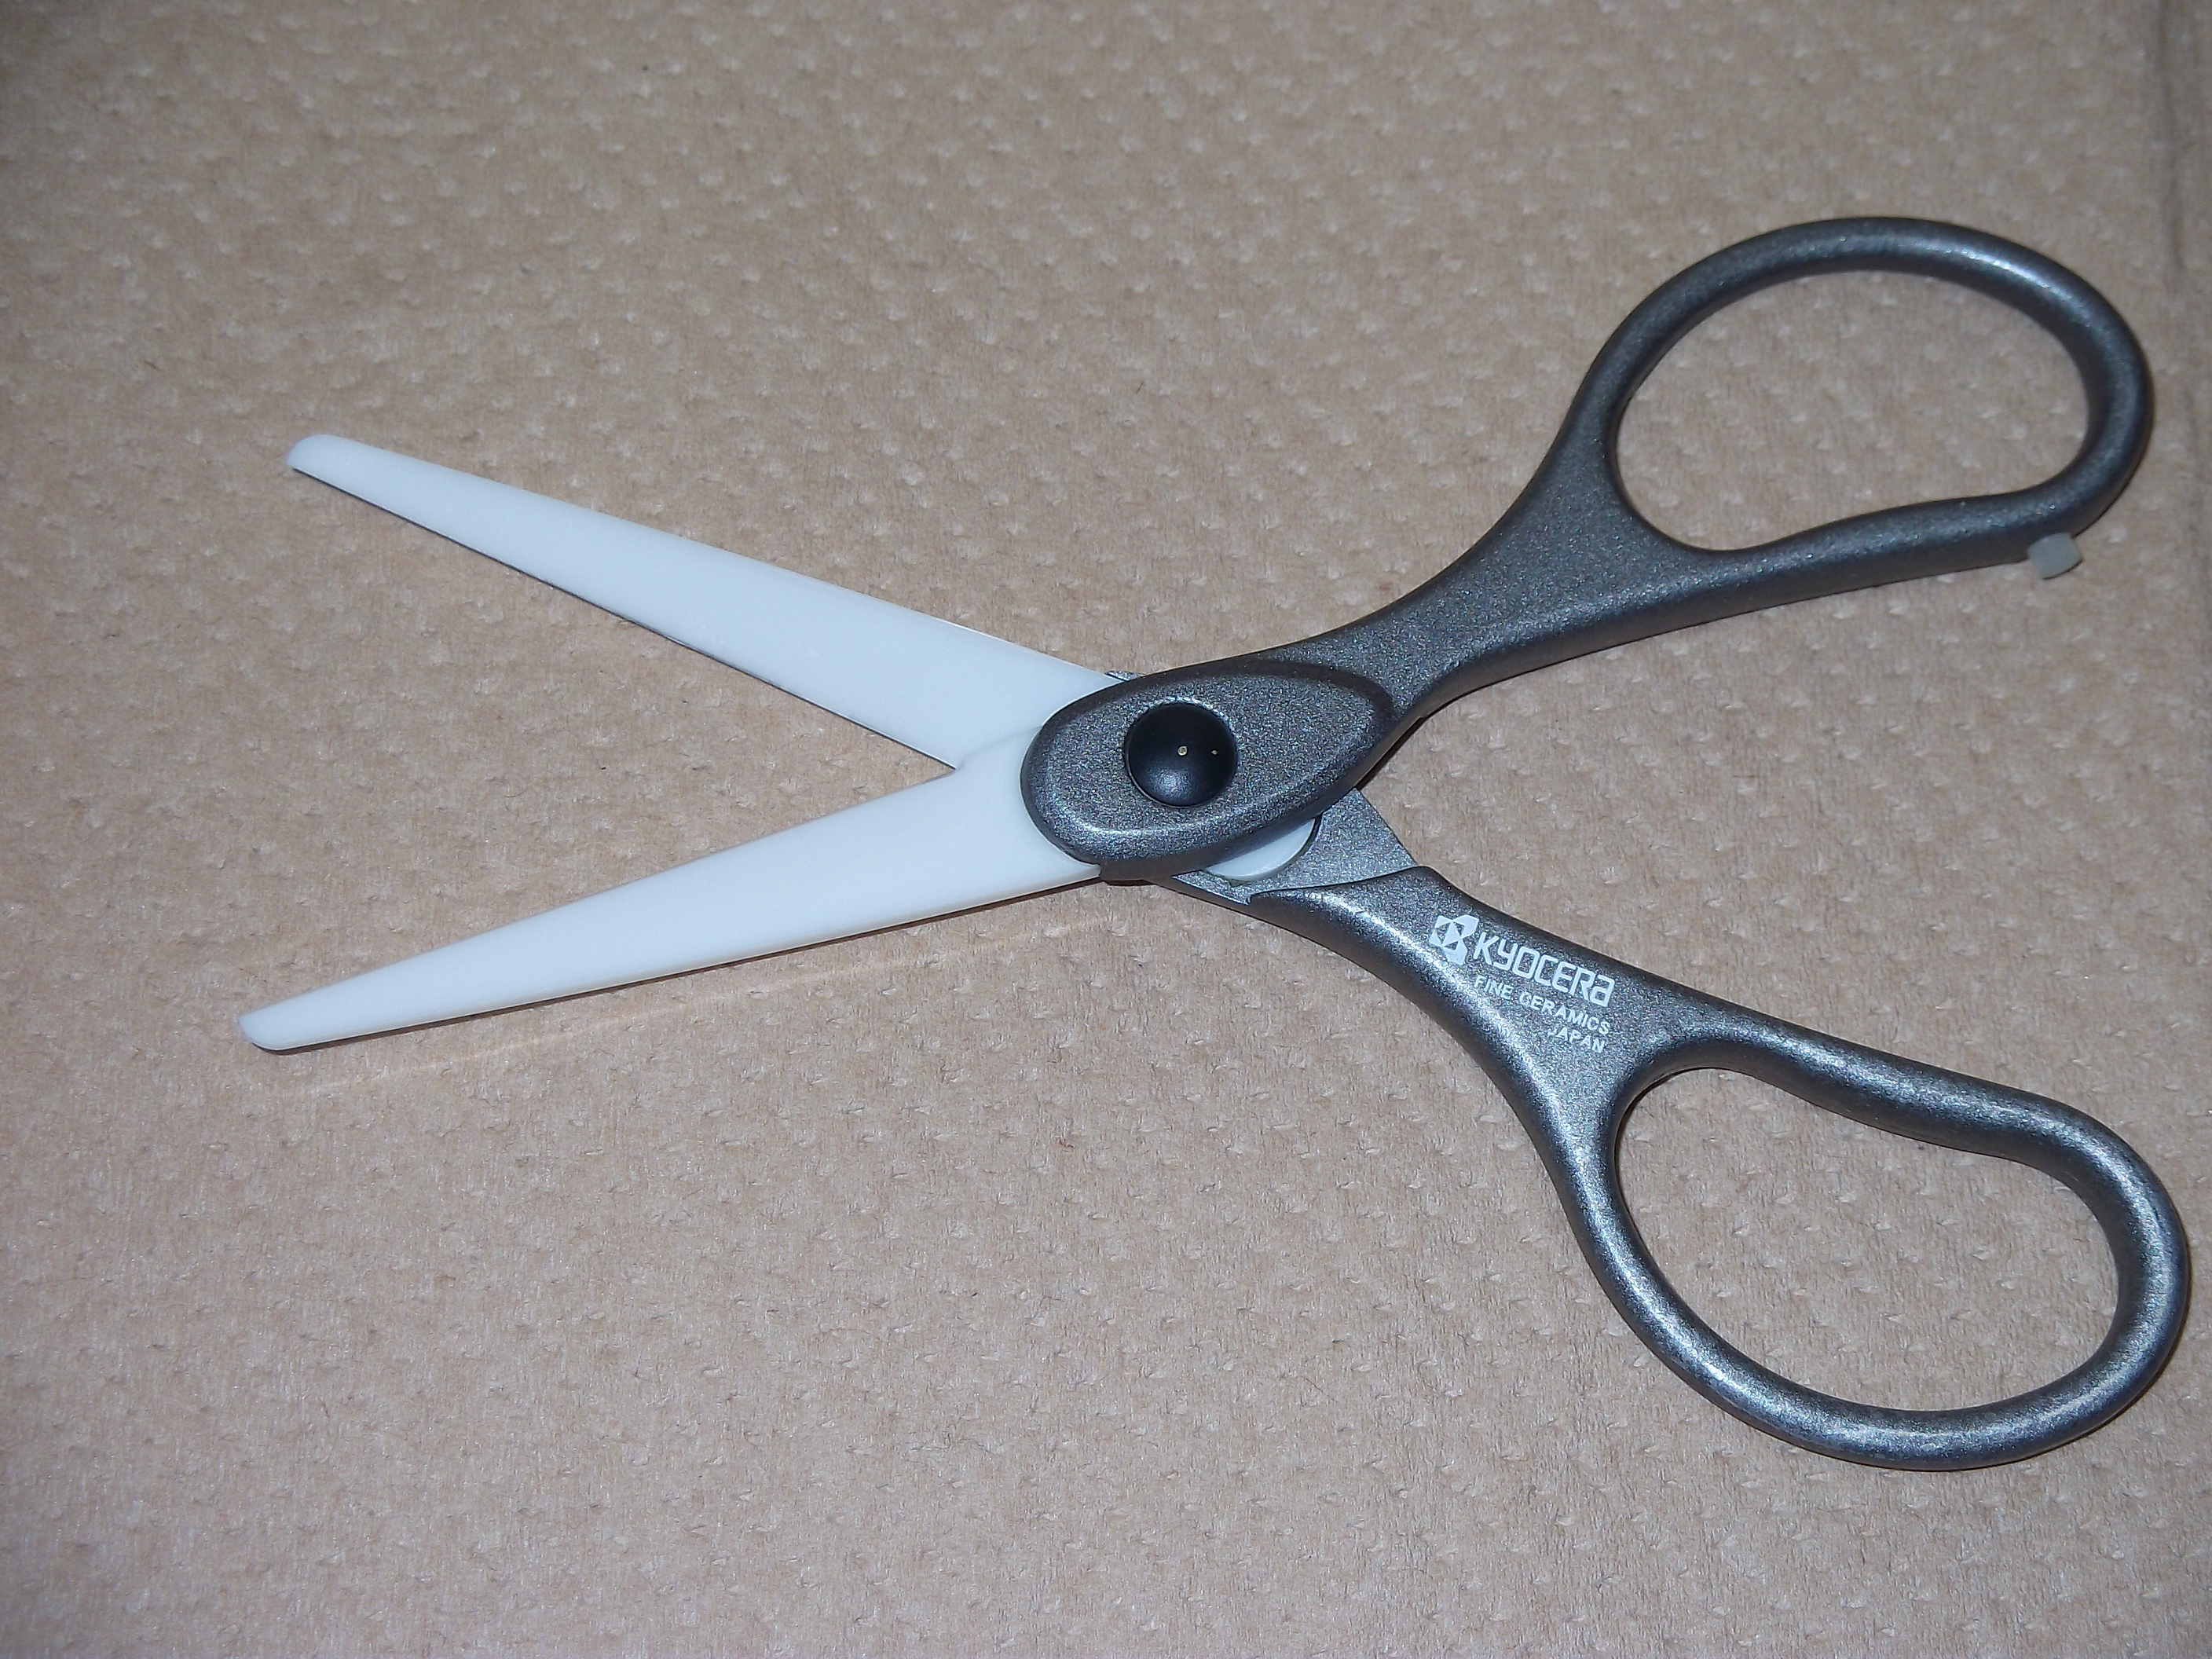 Ceramic scissors by Kyocera